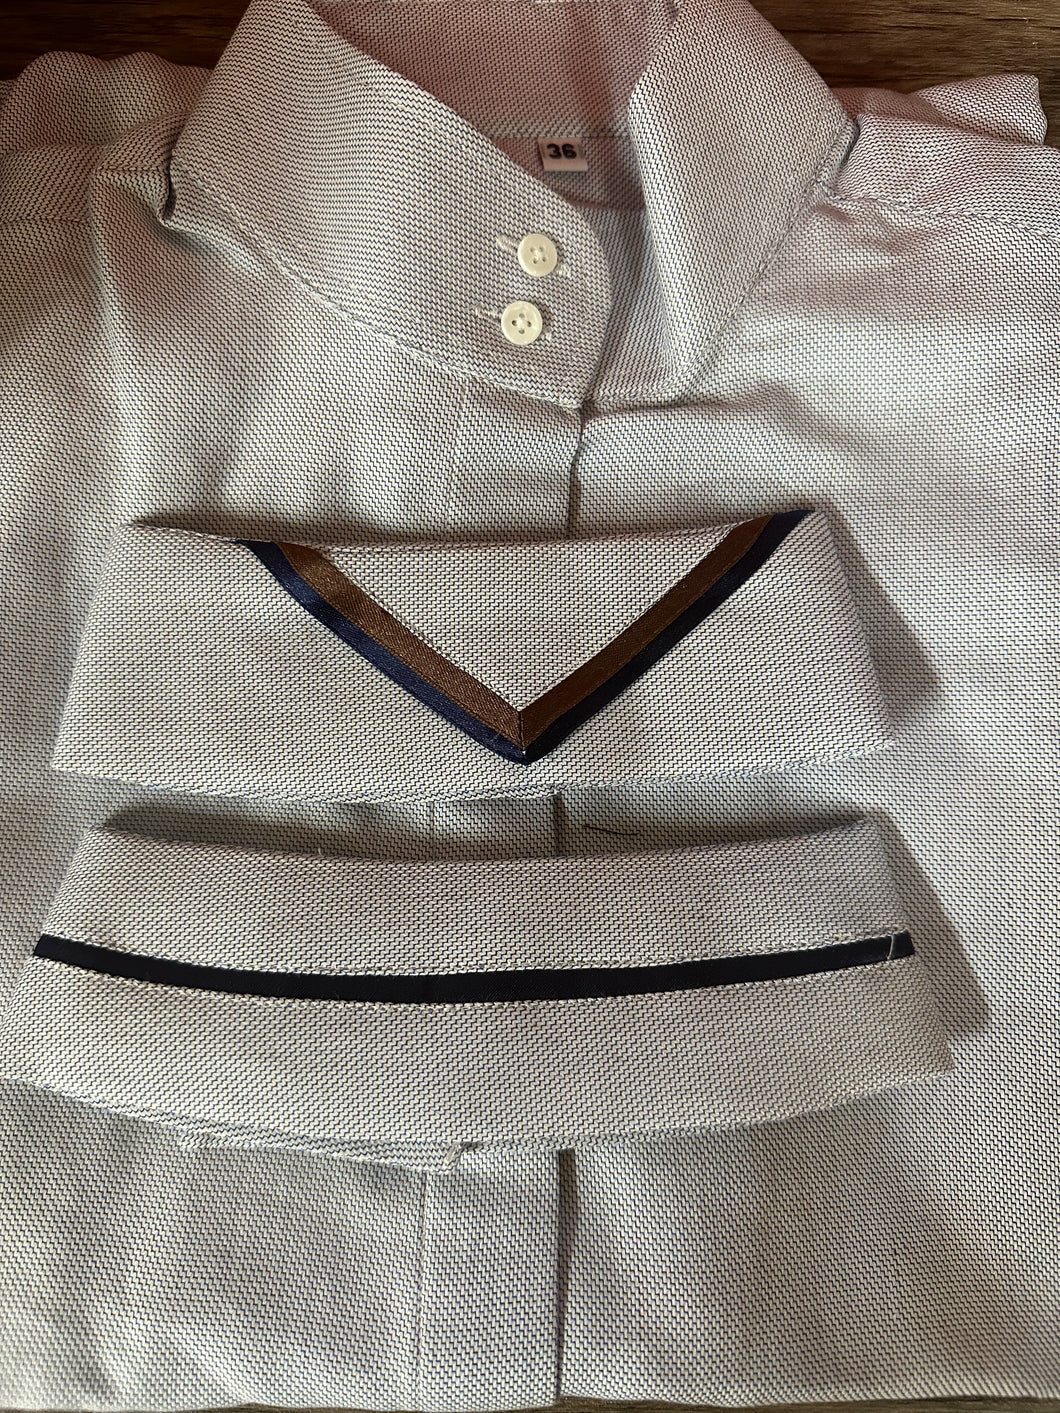 Navy/Brown Print - 2 Collars - Size 36